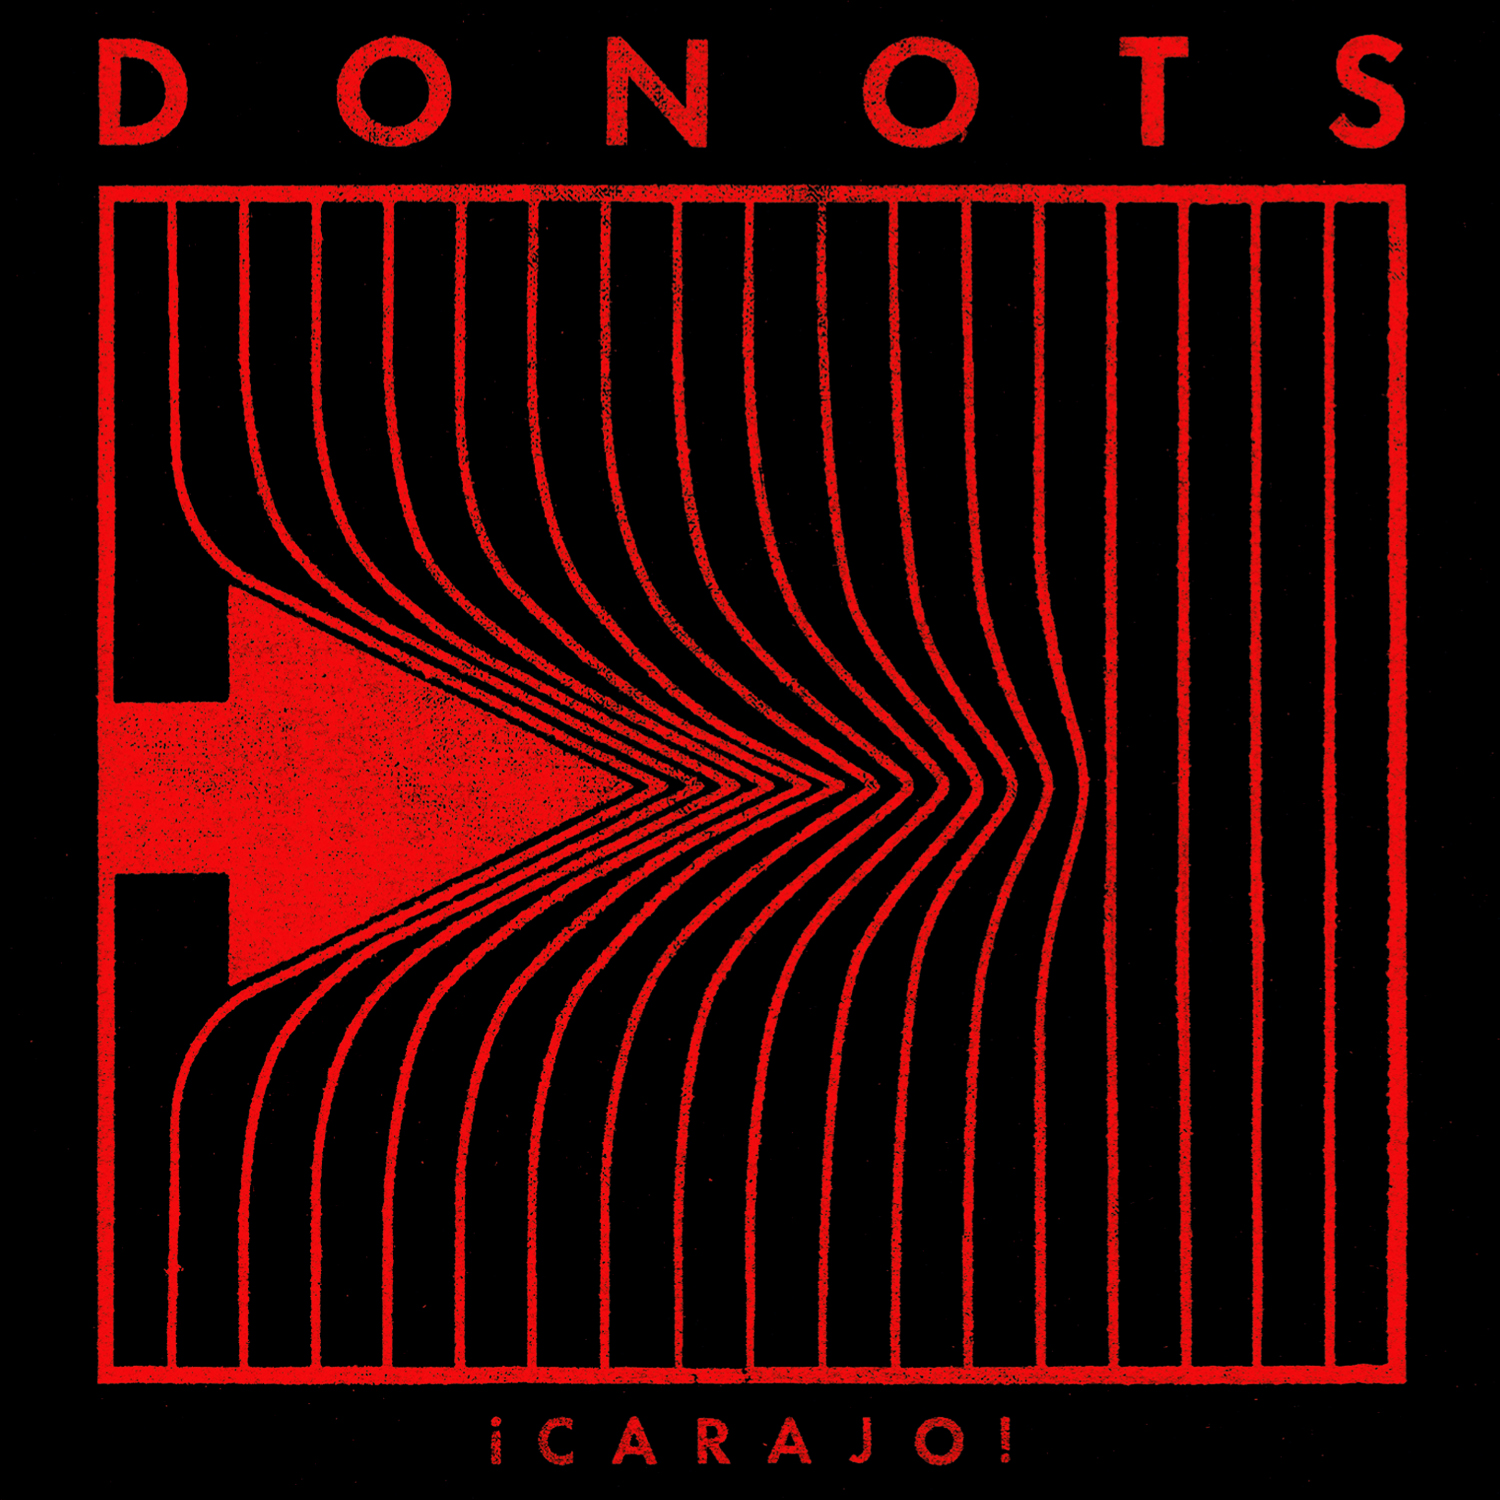 Donots- ¡CARAJO!